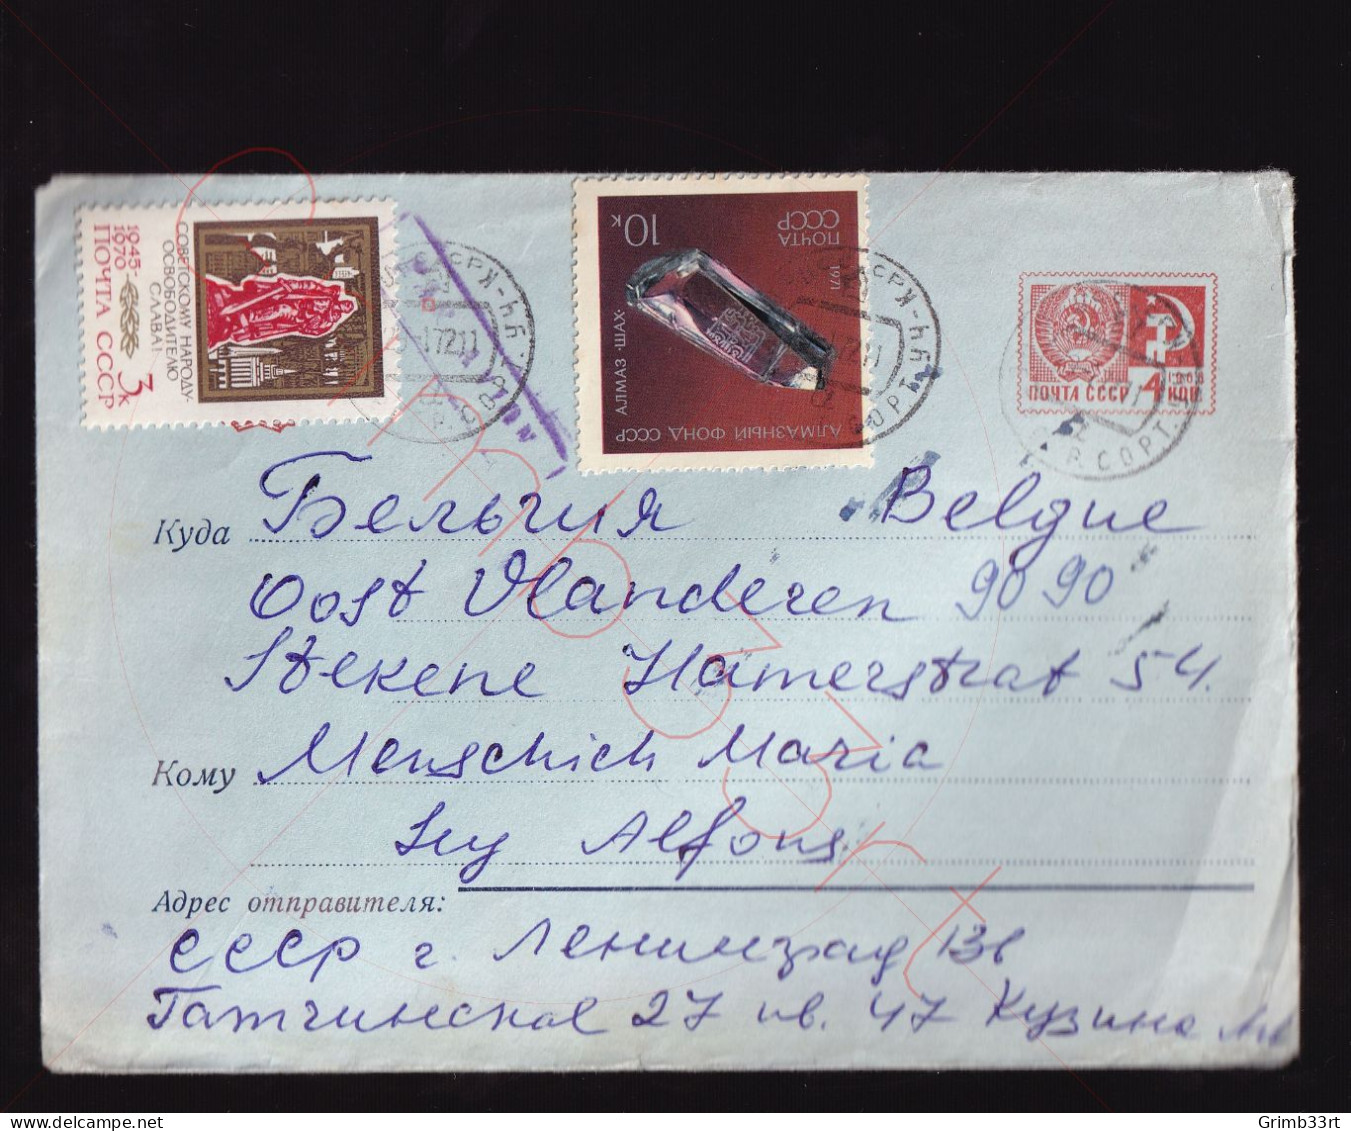 CCCP - Briefomslag Van Luchthaven Rusland Naar Stekene - PAR AVION - 23 Januari 1971 - Cartas & Documentos